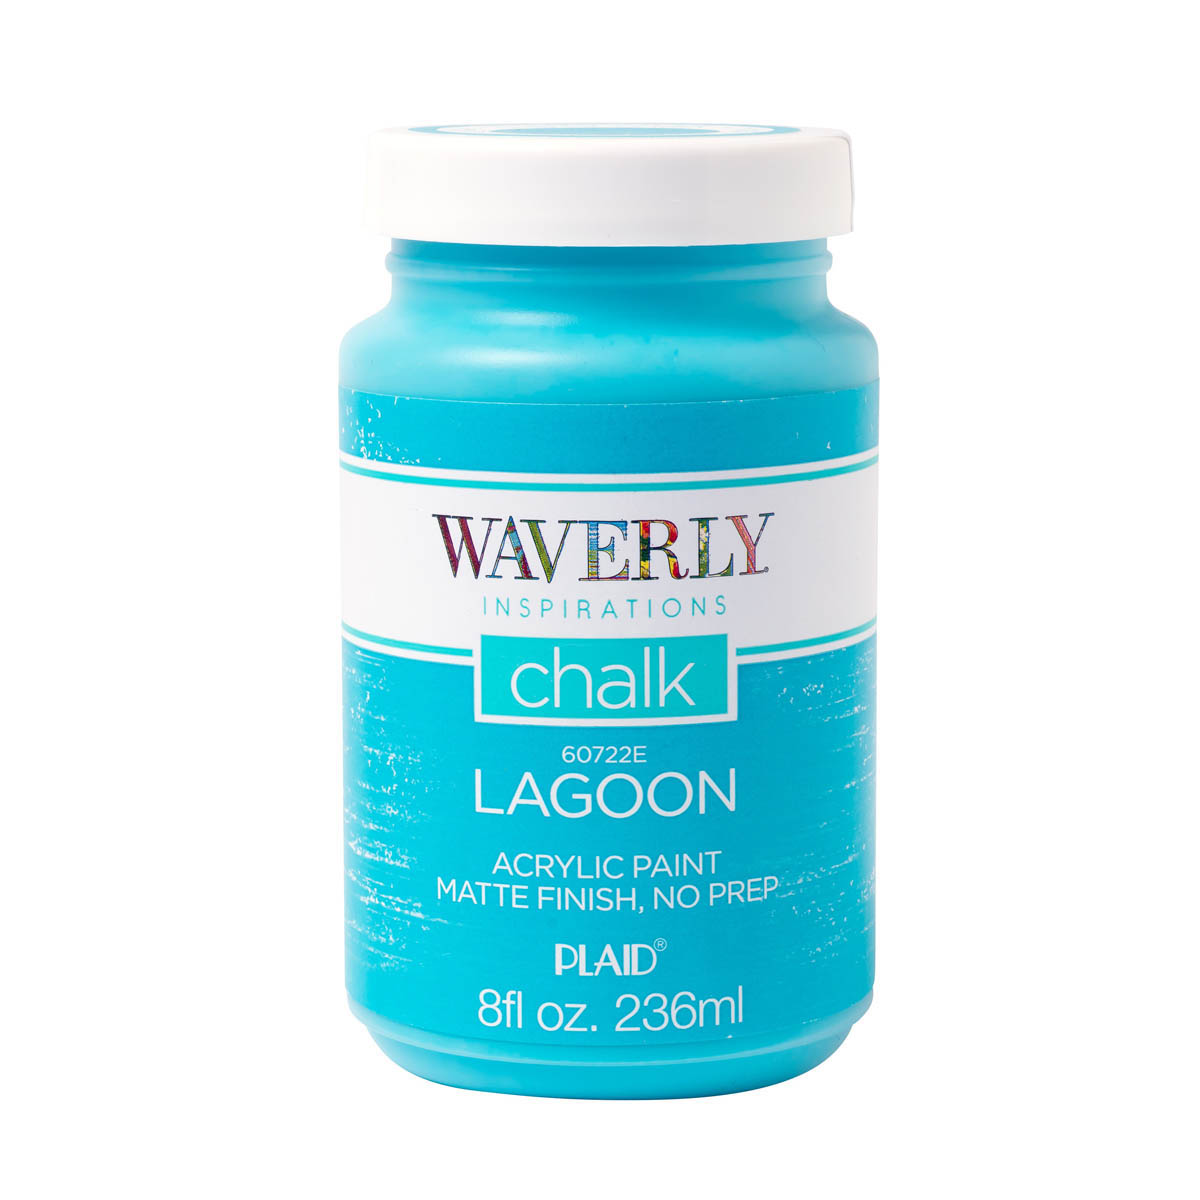 Waverly ® Inspirations Chalk Acrylic Paint - Lagoon, 8 oz. - 60722E